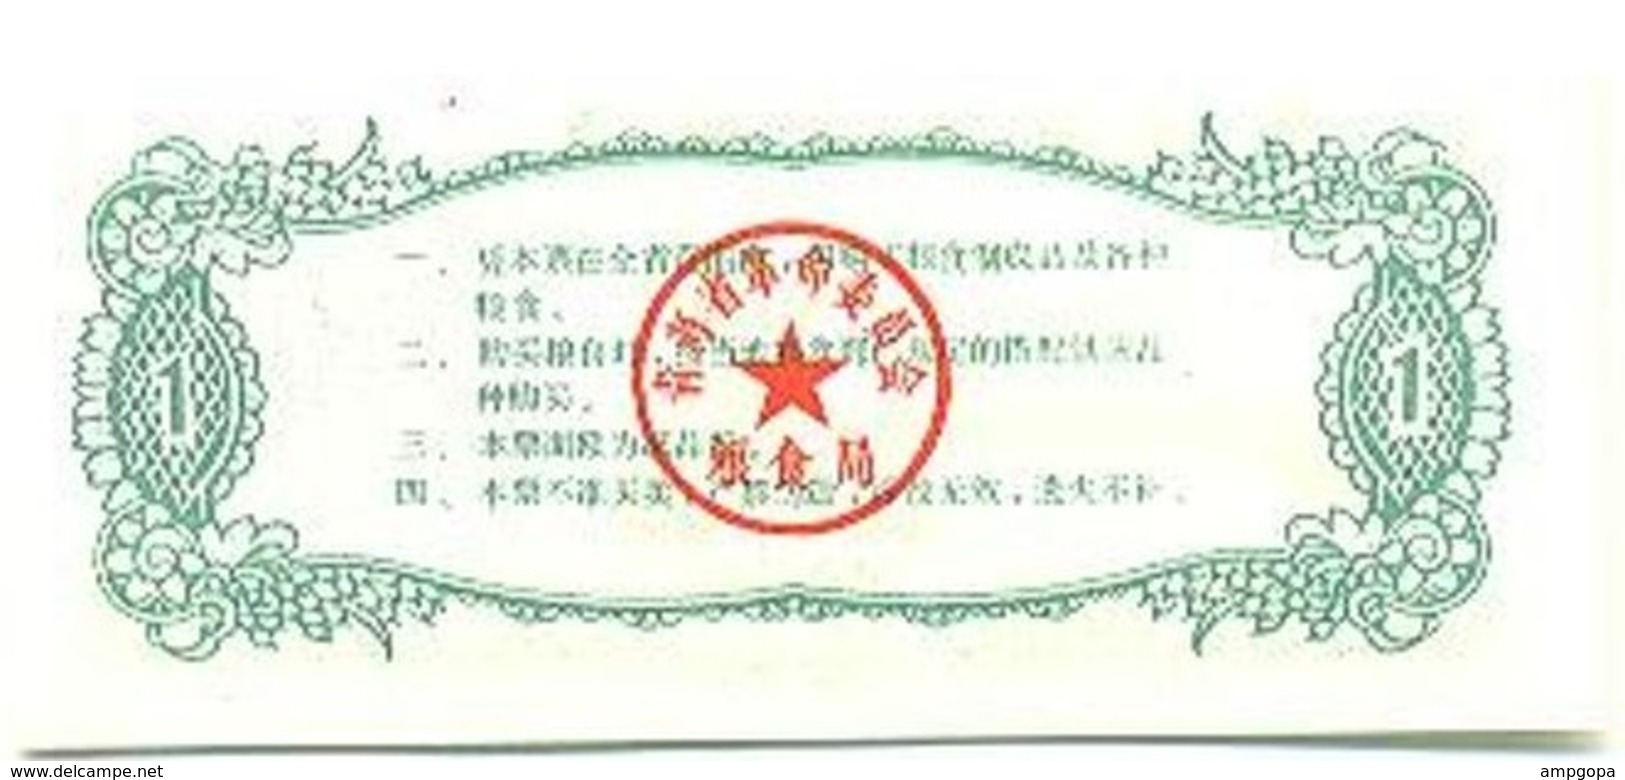 China 1 Jin Qinghai 1975 Ref 413-1 UNC - China